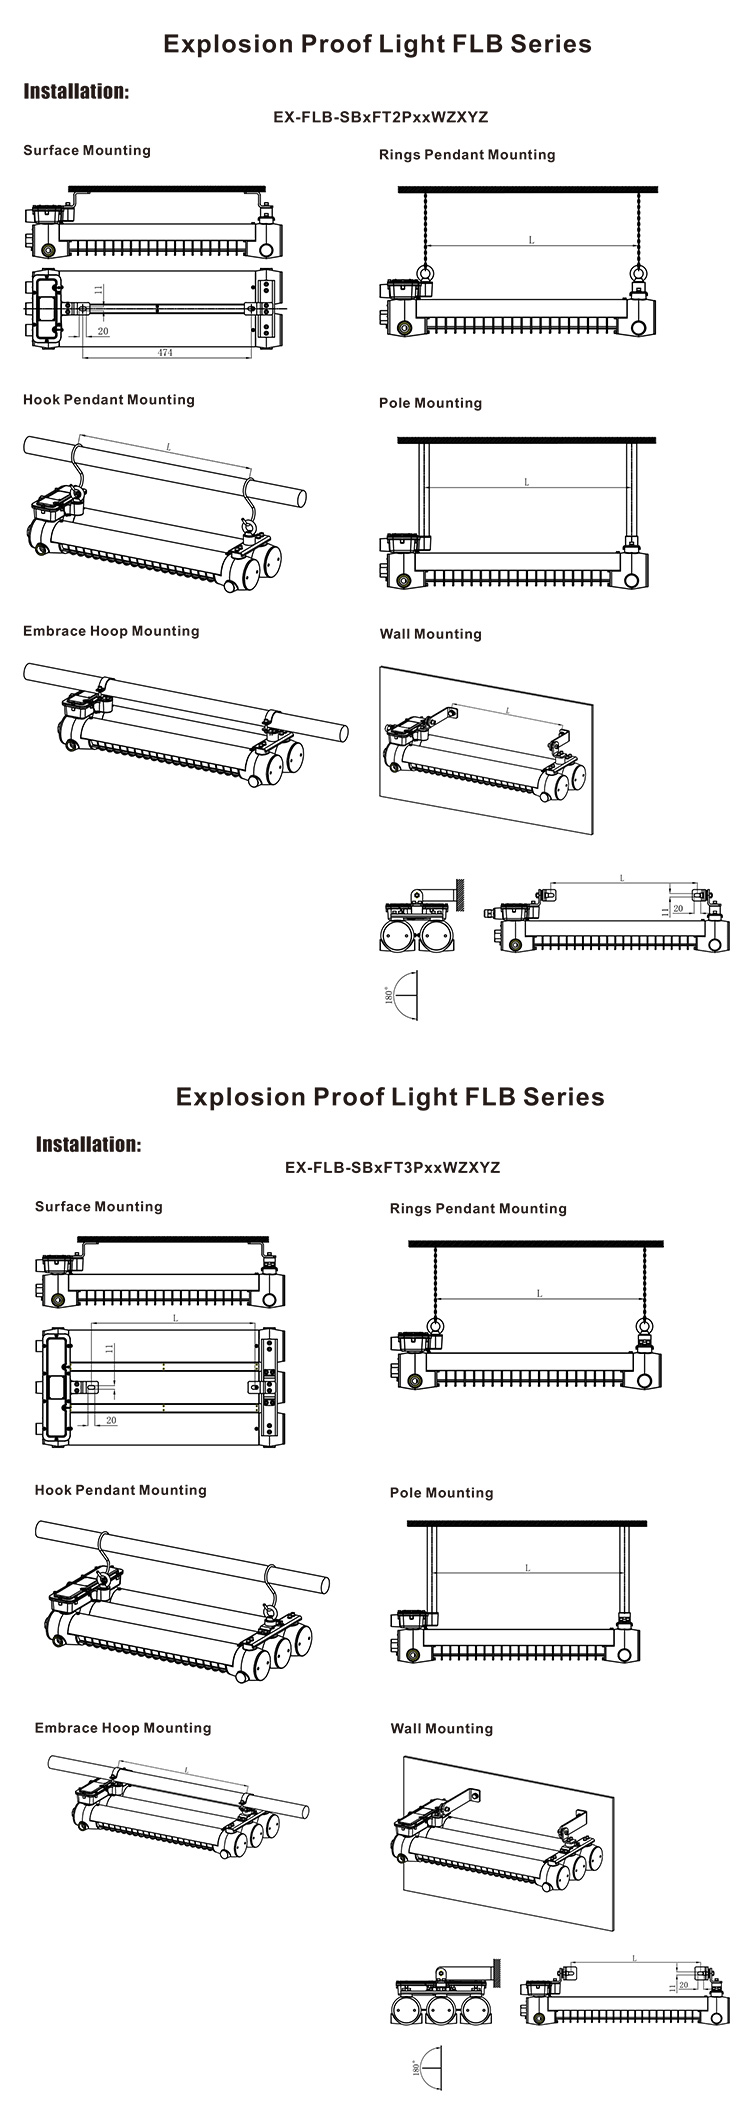 Pan American Explosion Proof Light FLB Series